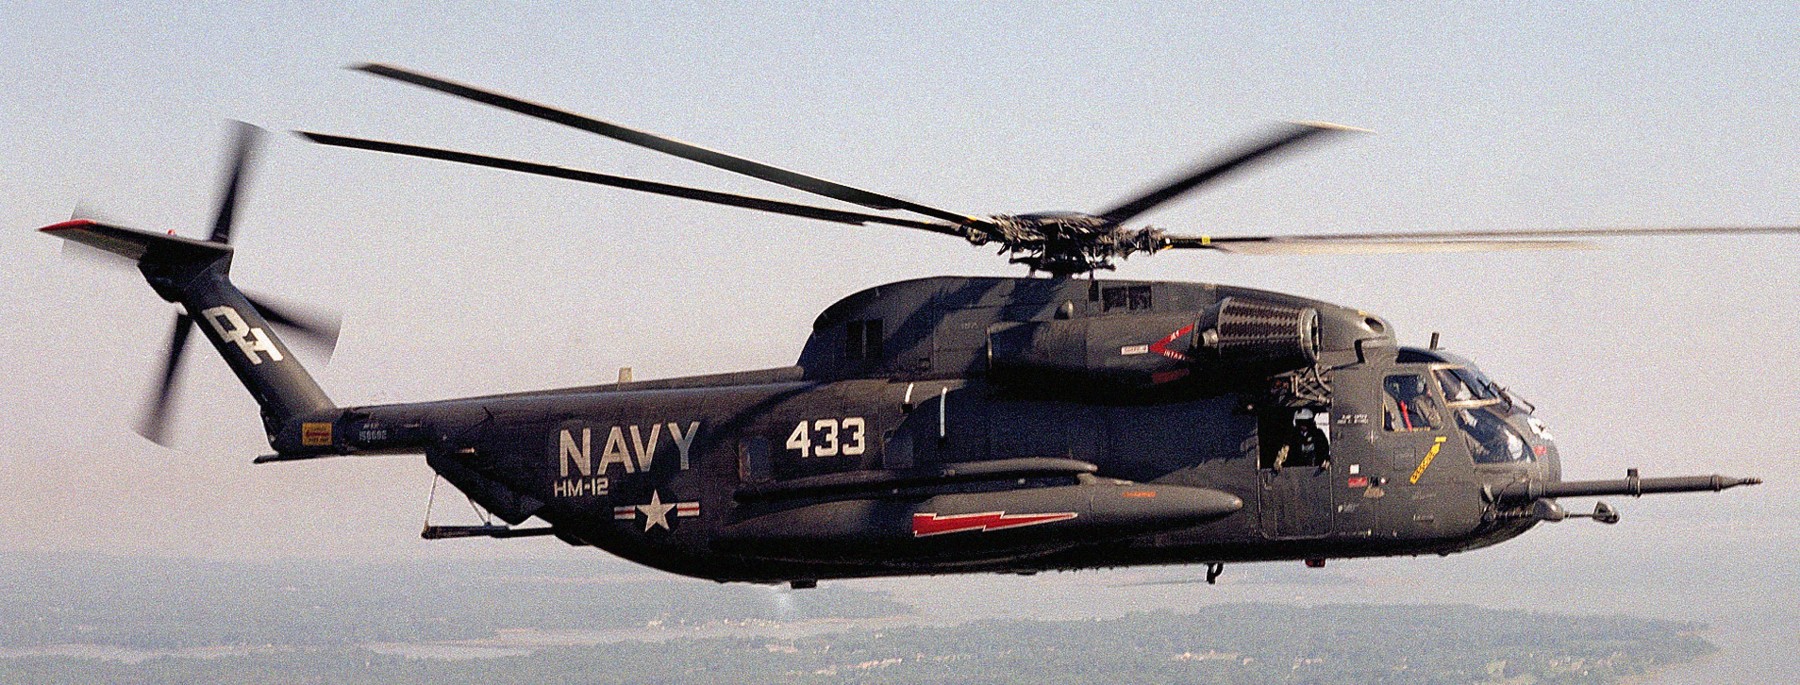 hm-12 sea dragons helicopter mine countermeasures squadron navy rh-53d sea stallion 06